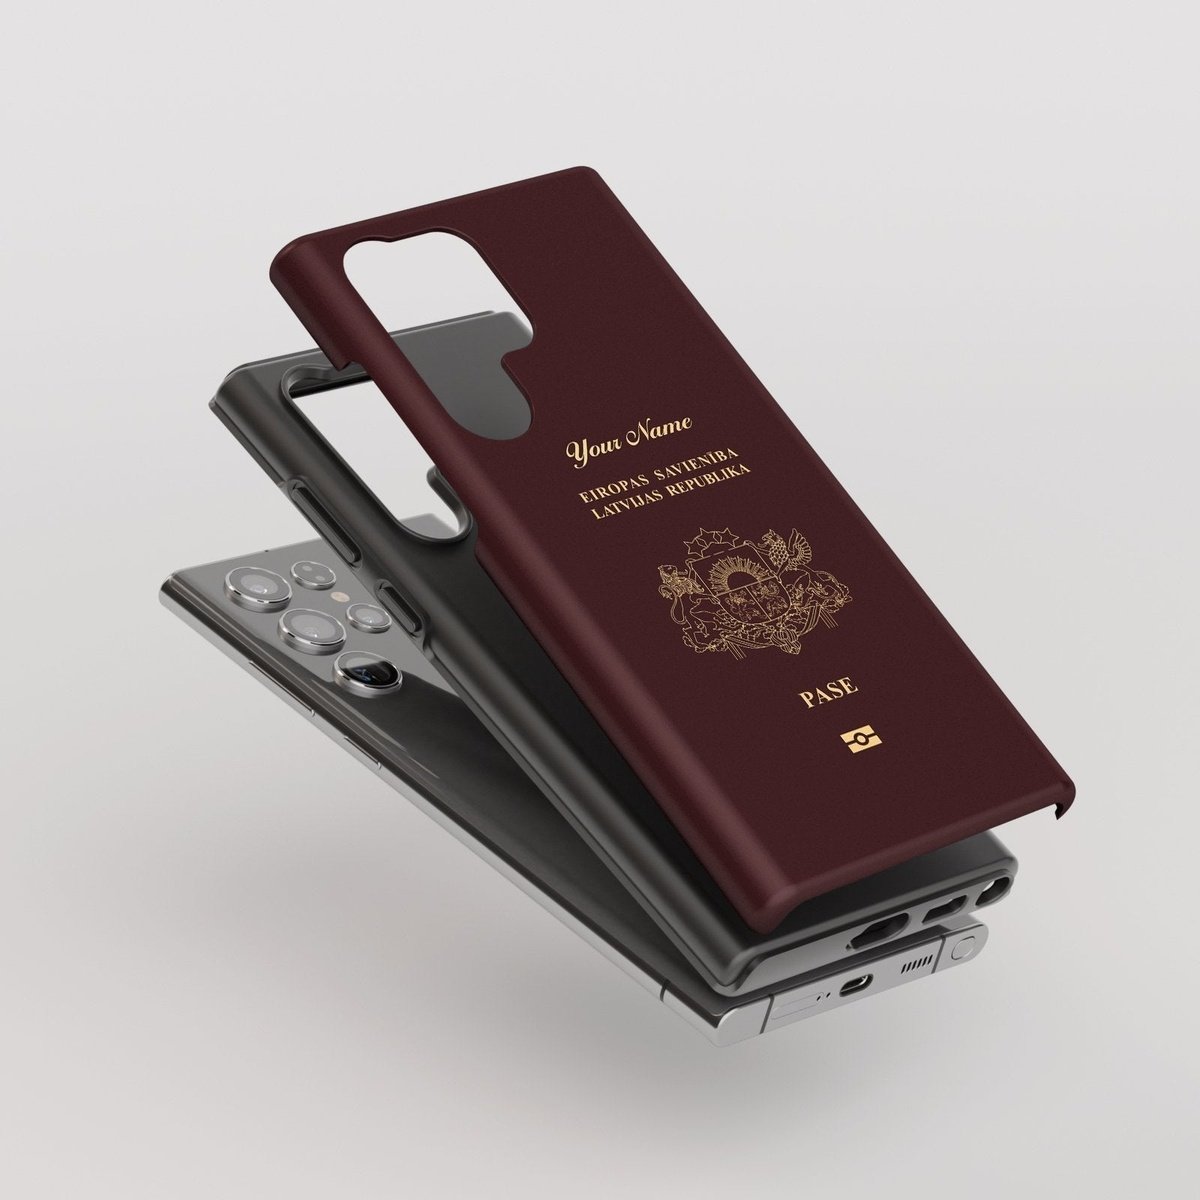 Latvia Passport - Samsung Galaxy S Case